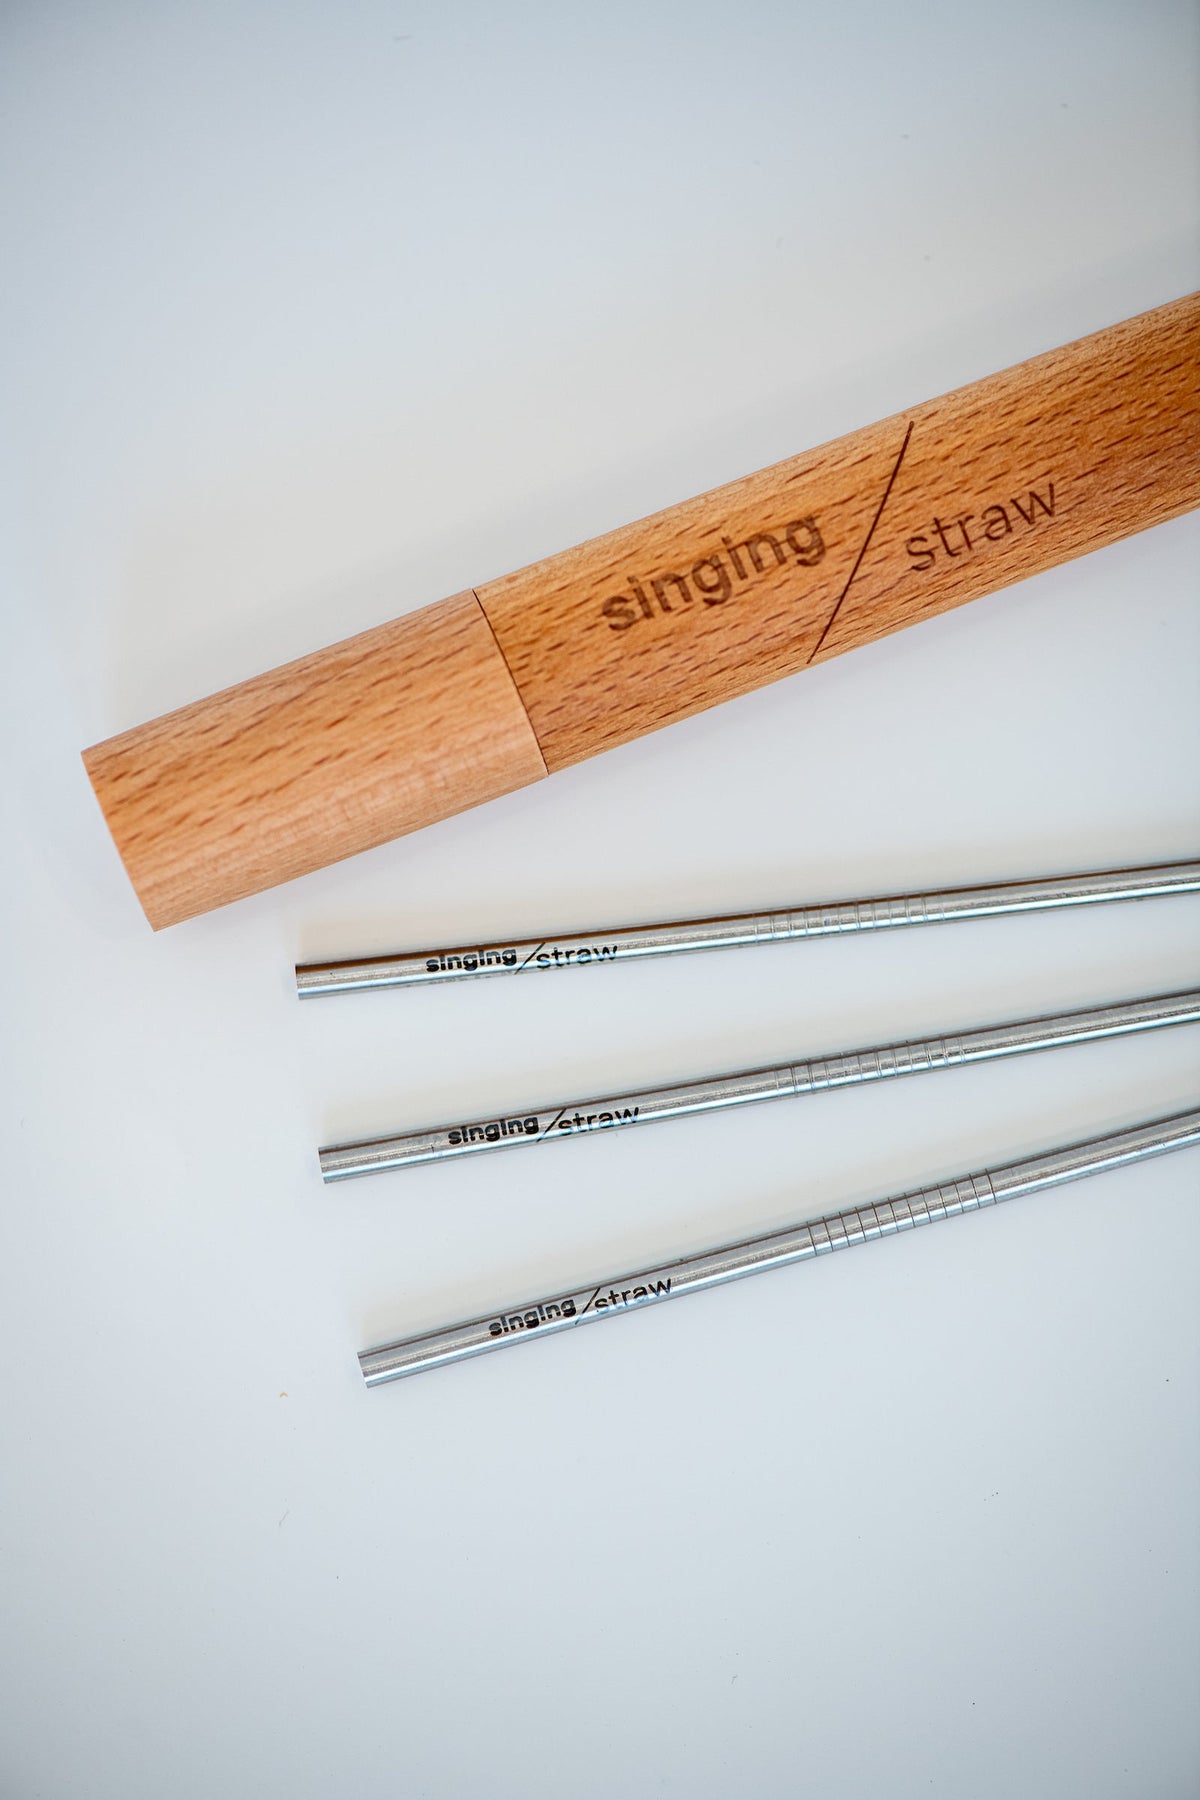 Singing / Straw Straw Phonation SOVT Exercise Tool